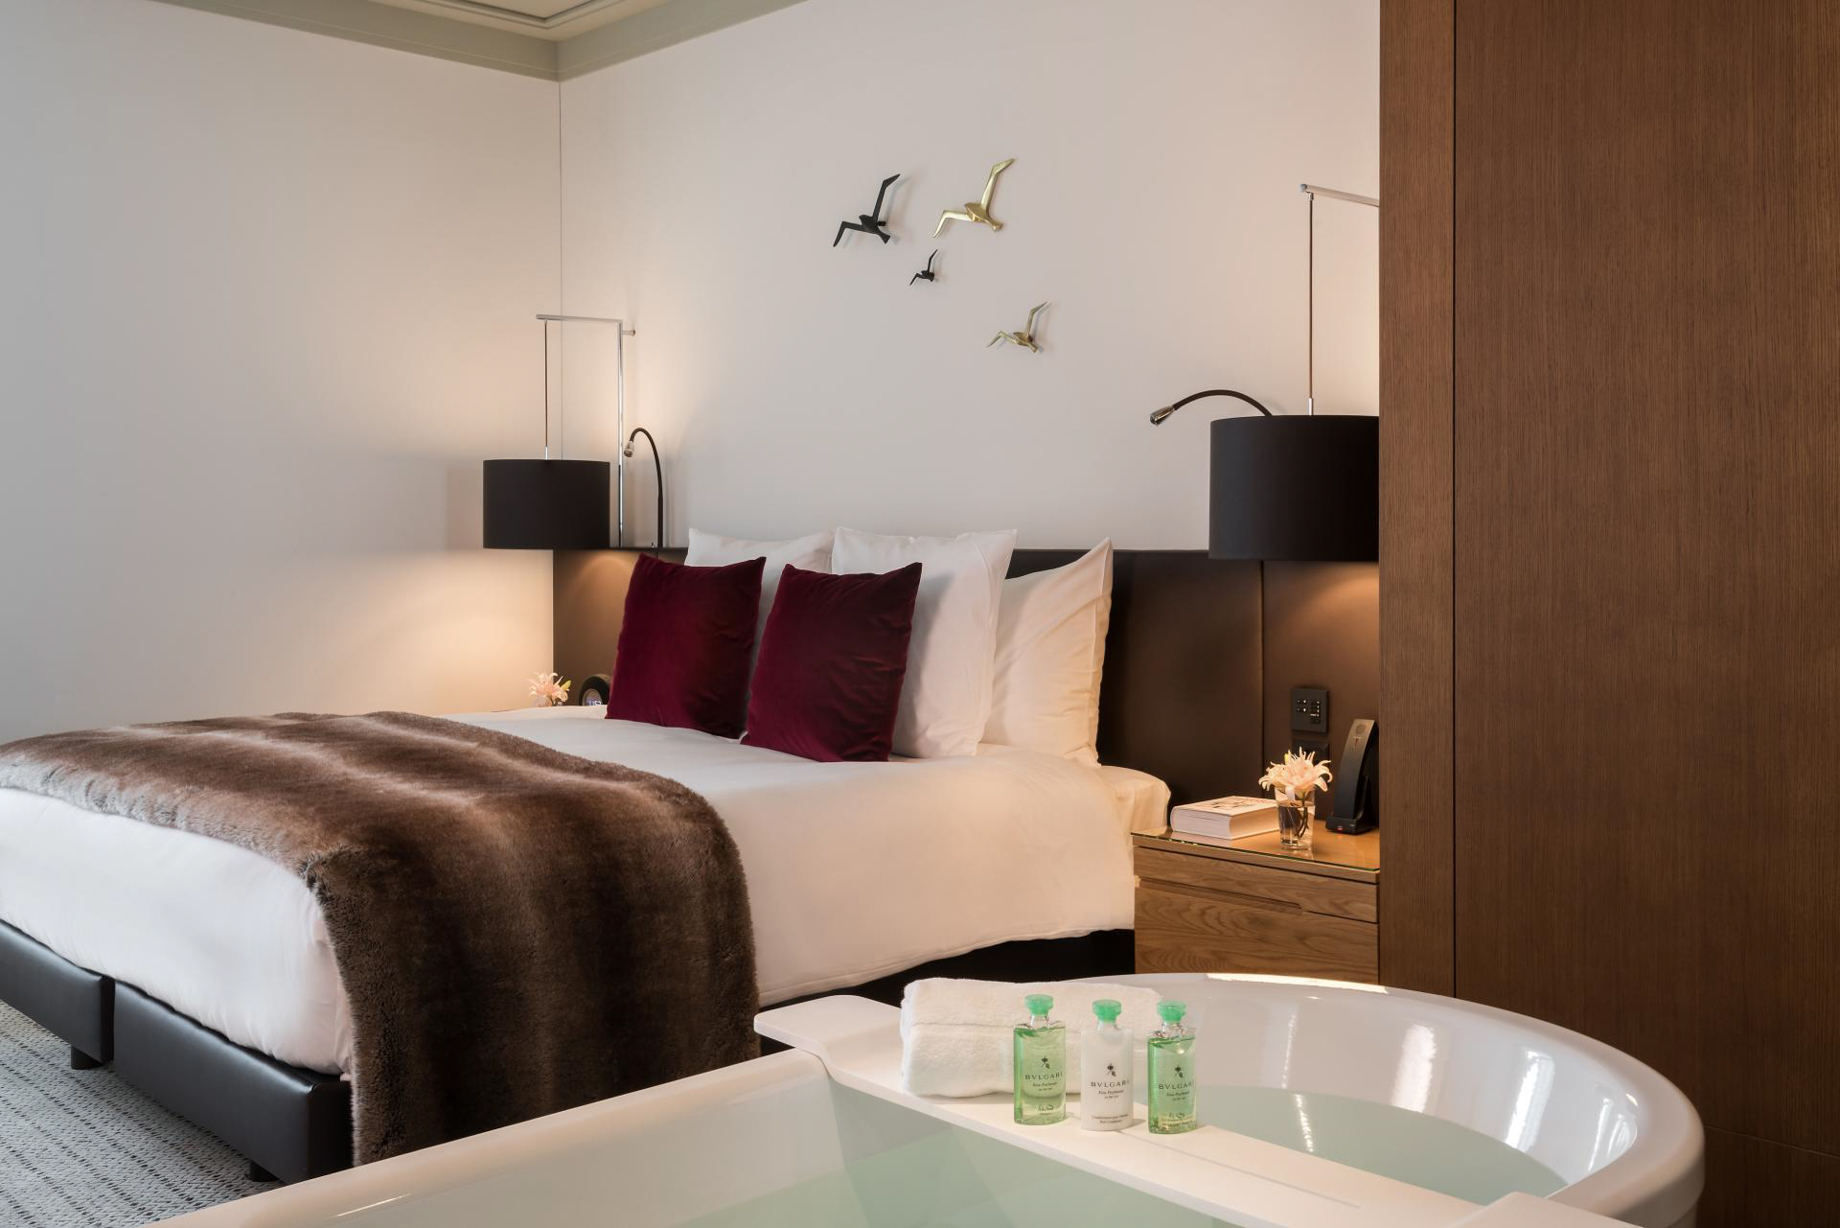 Palace Hotel – Burgenstock Hotels & Resort – Obburgen, Switzerland – Palace Lakeview Suite Bedroom